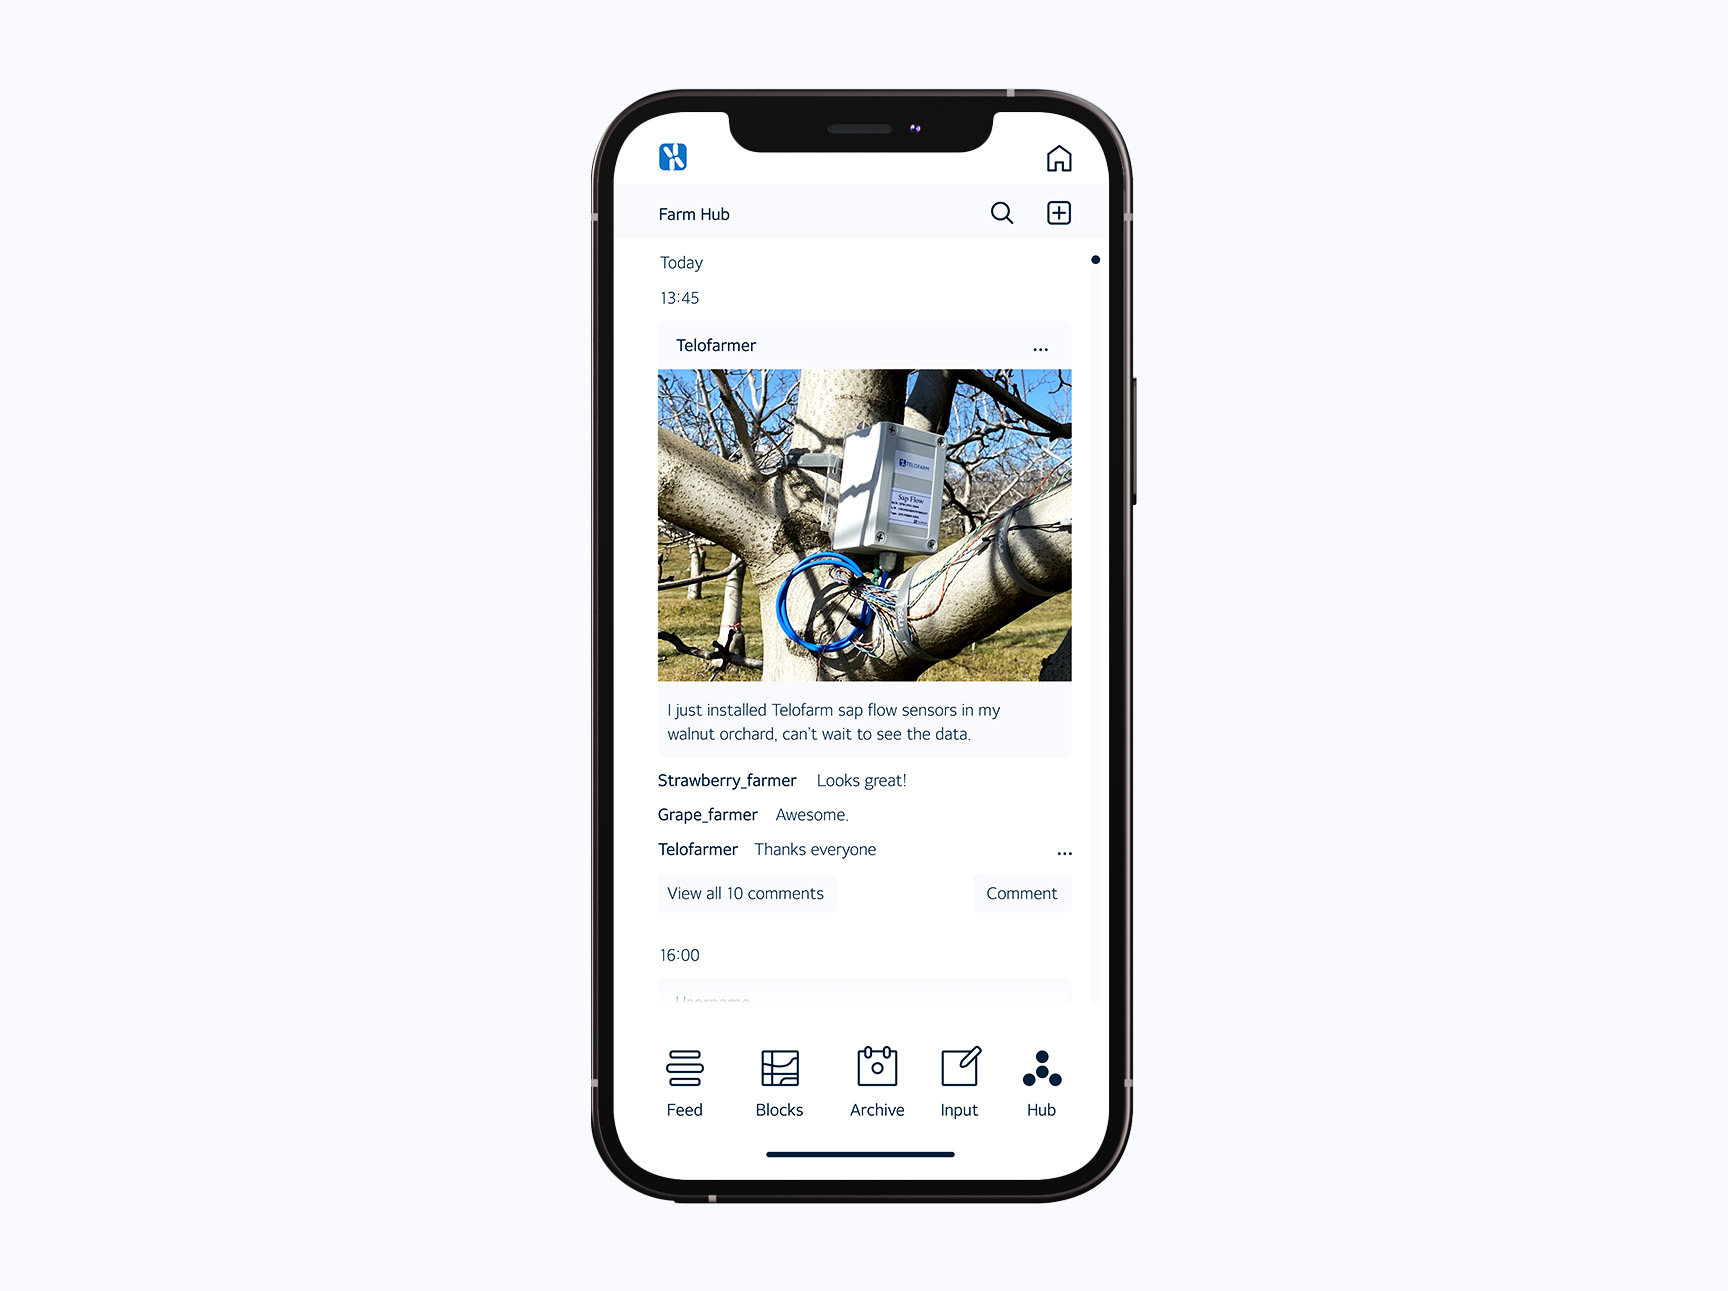 The Telofarmer app displaying the social hub screen